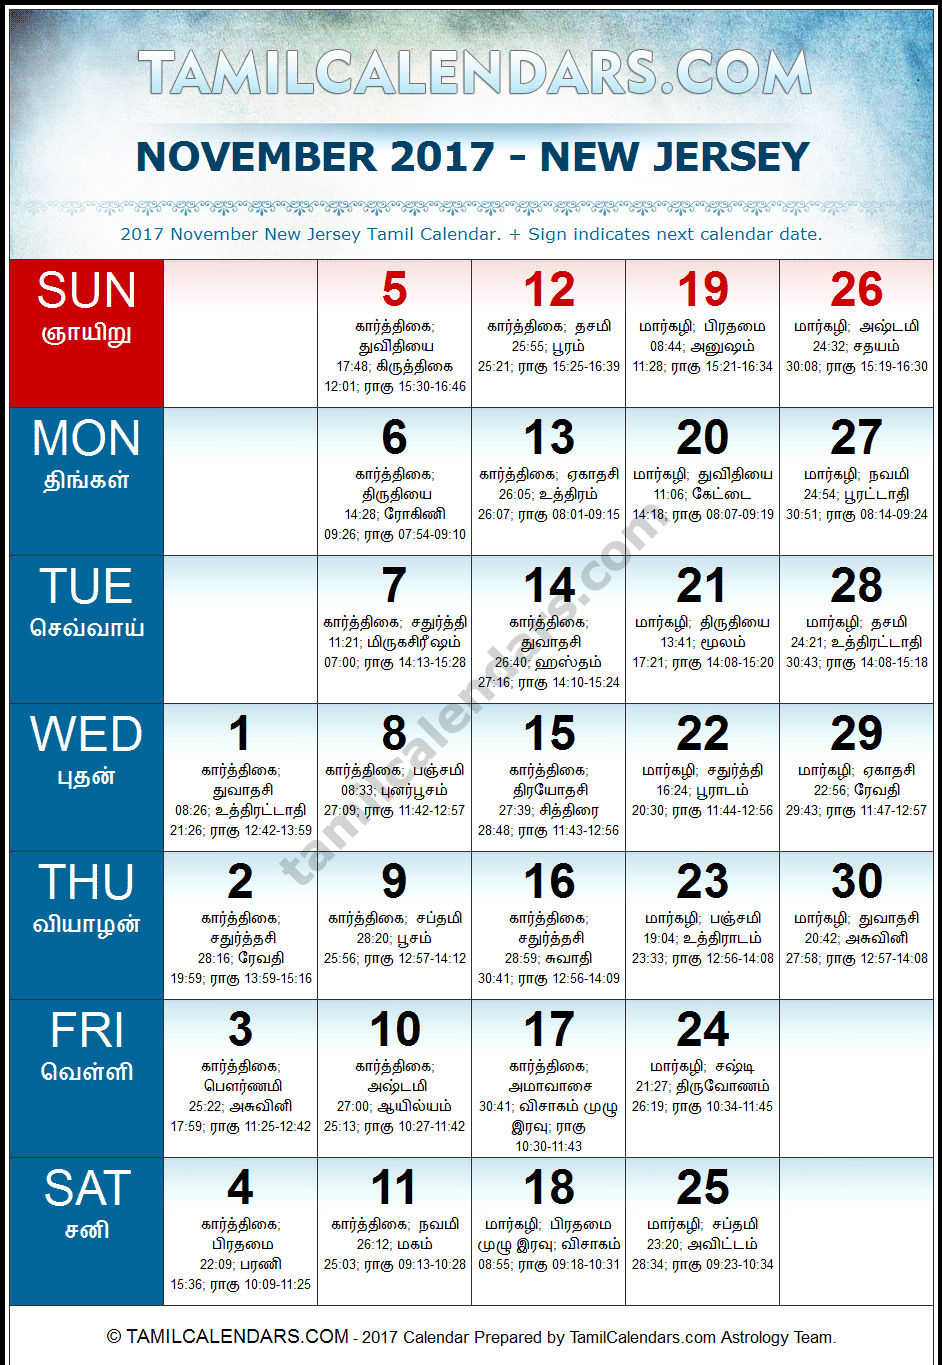 November 2017 Tamil Calendar for New Jersey, USA